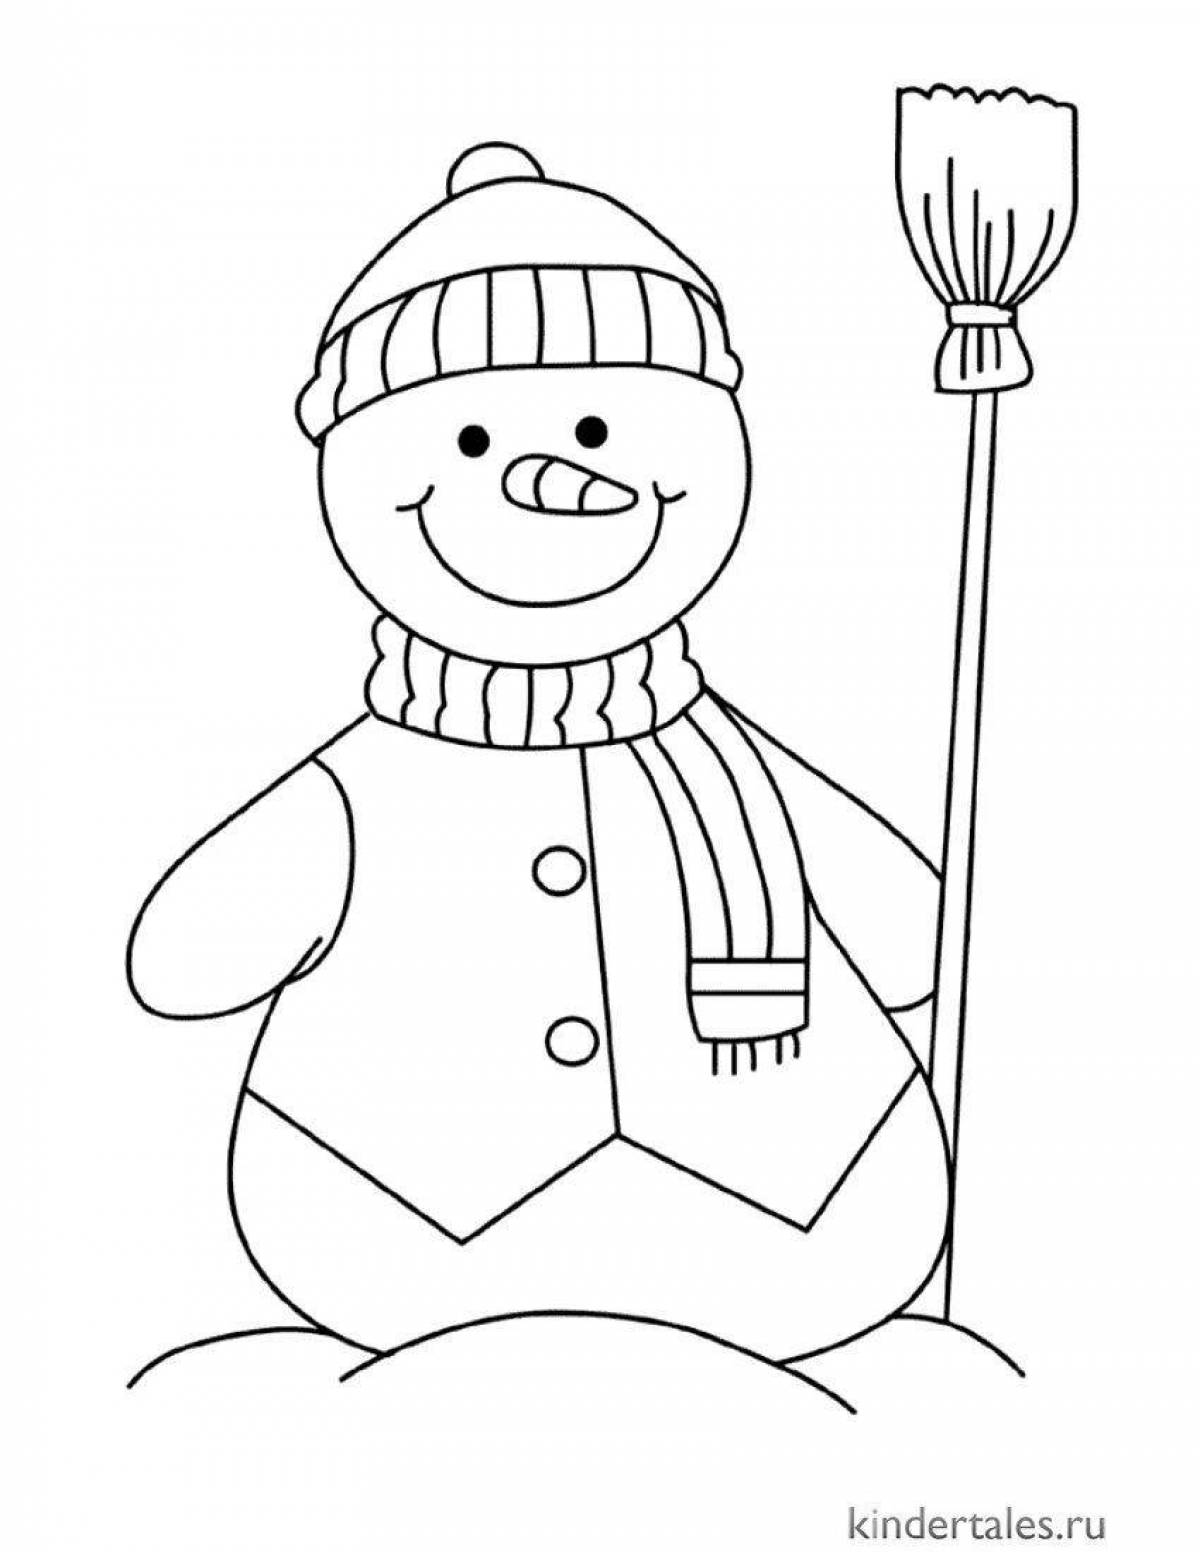 Colored snowman for children 3 4